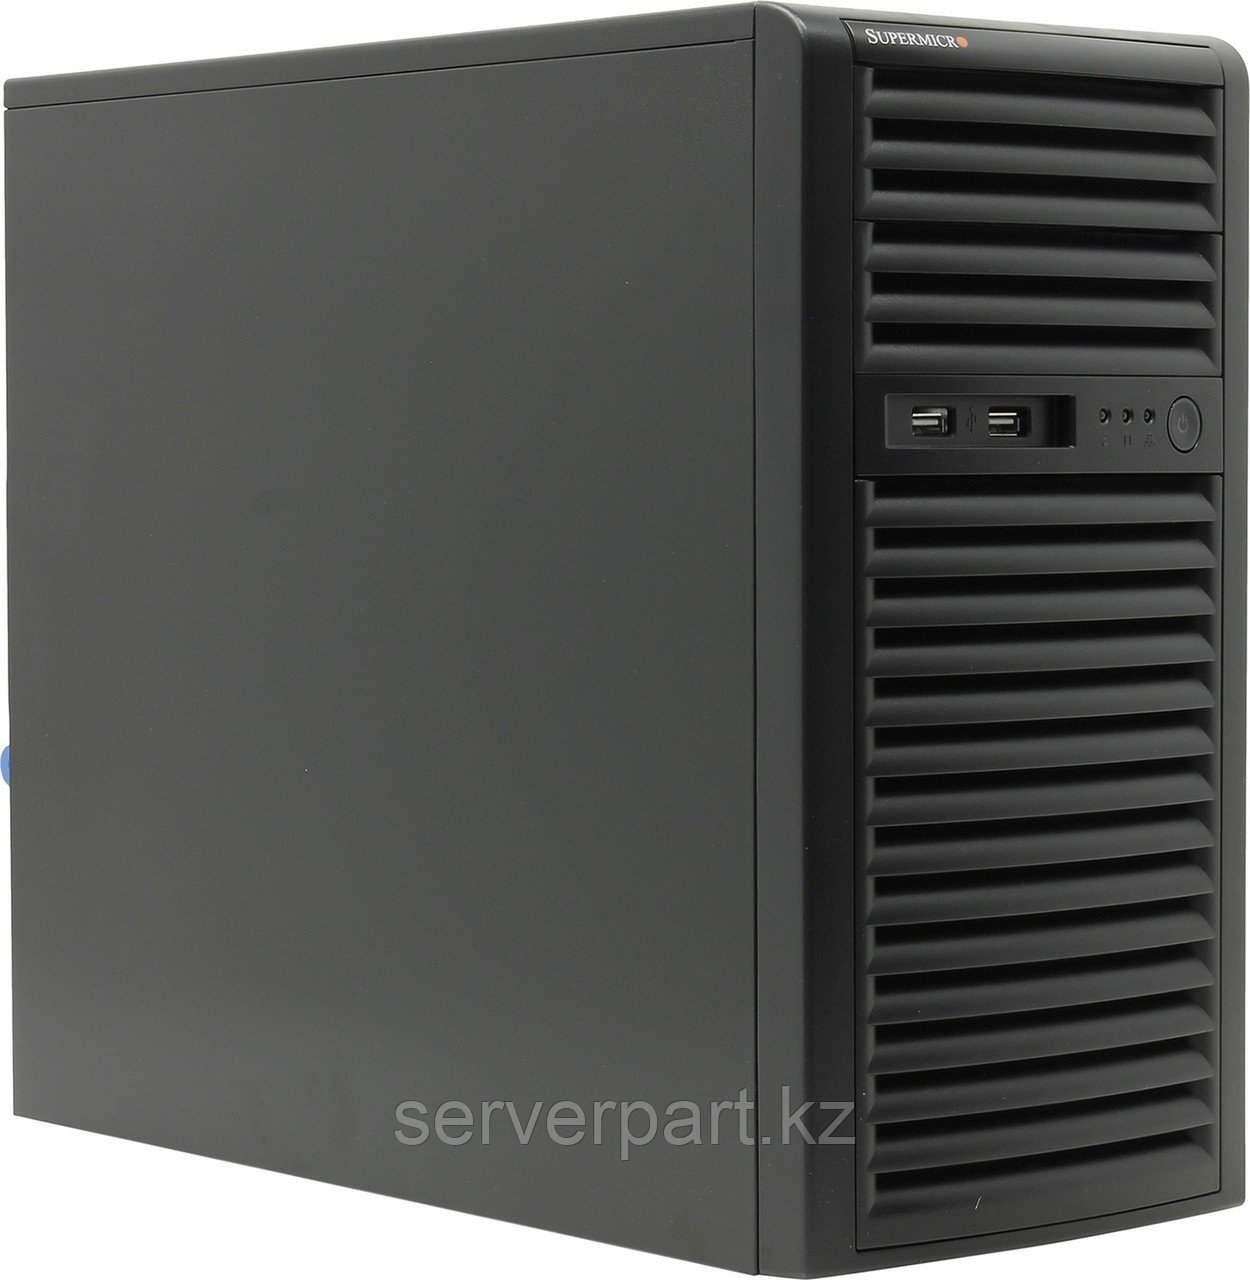 Сервер Supermicro SYS-5039D Tower/4-core intel xeon E3-1220v6 3GHz/64GB EUDIMM/1x240GB SSD MU Hyb, фото 1